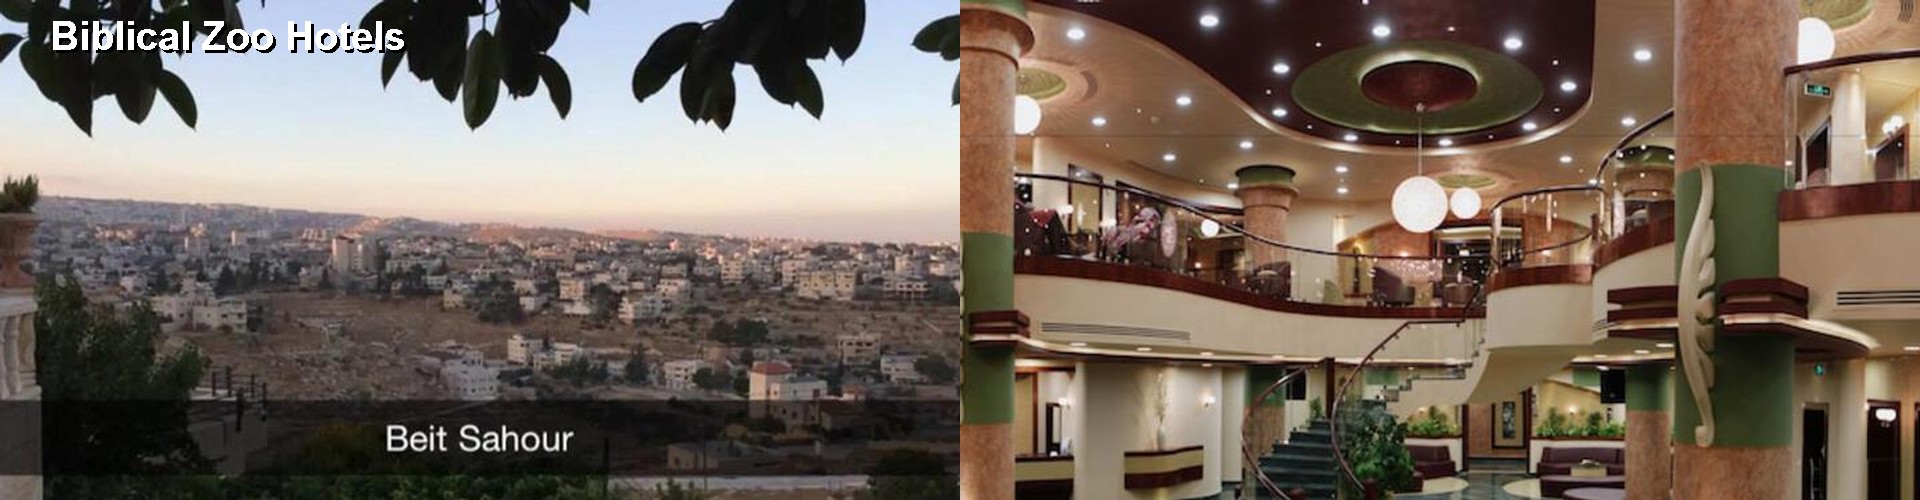 5 Best Hotels near Biblical Zoo